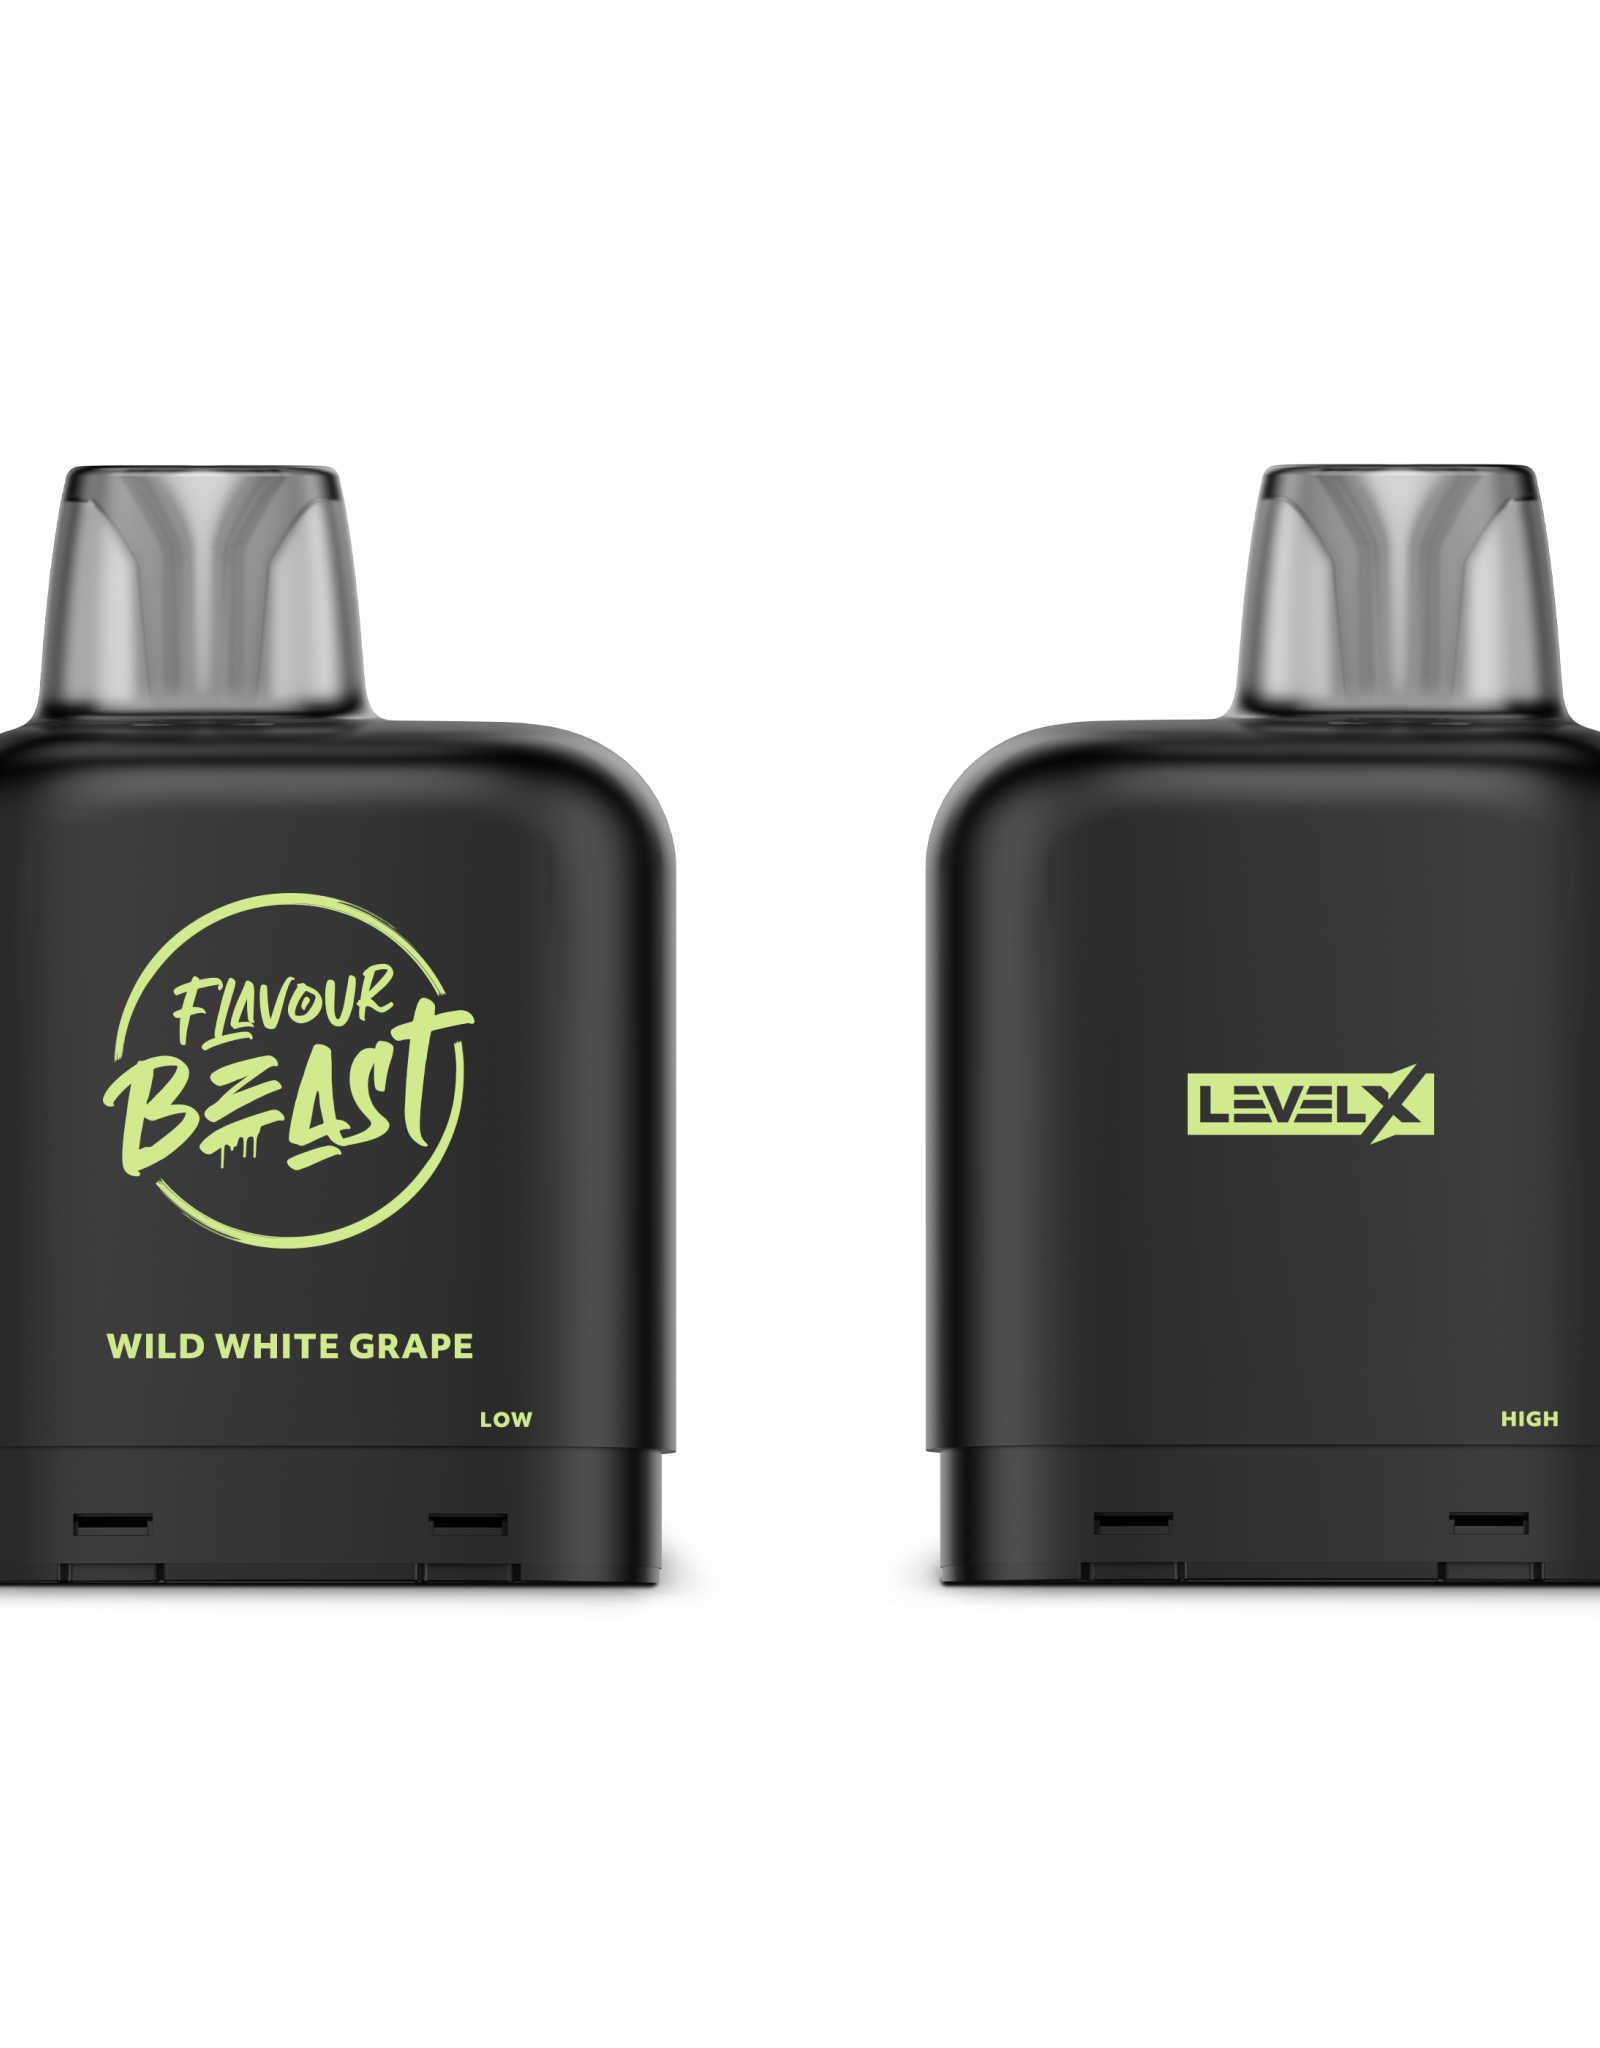 Level X Flavour Beast Pod